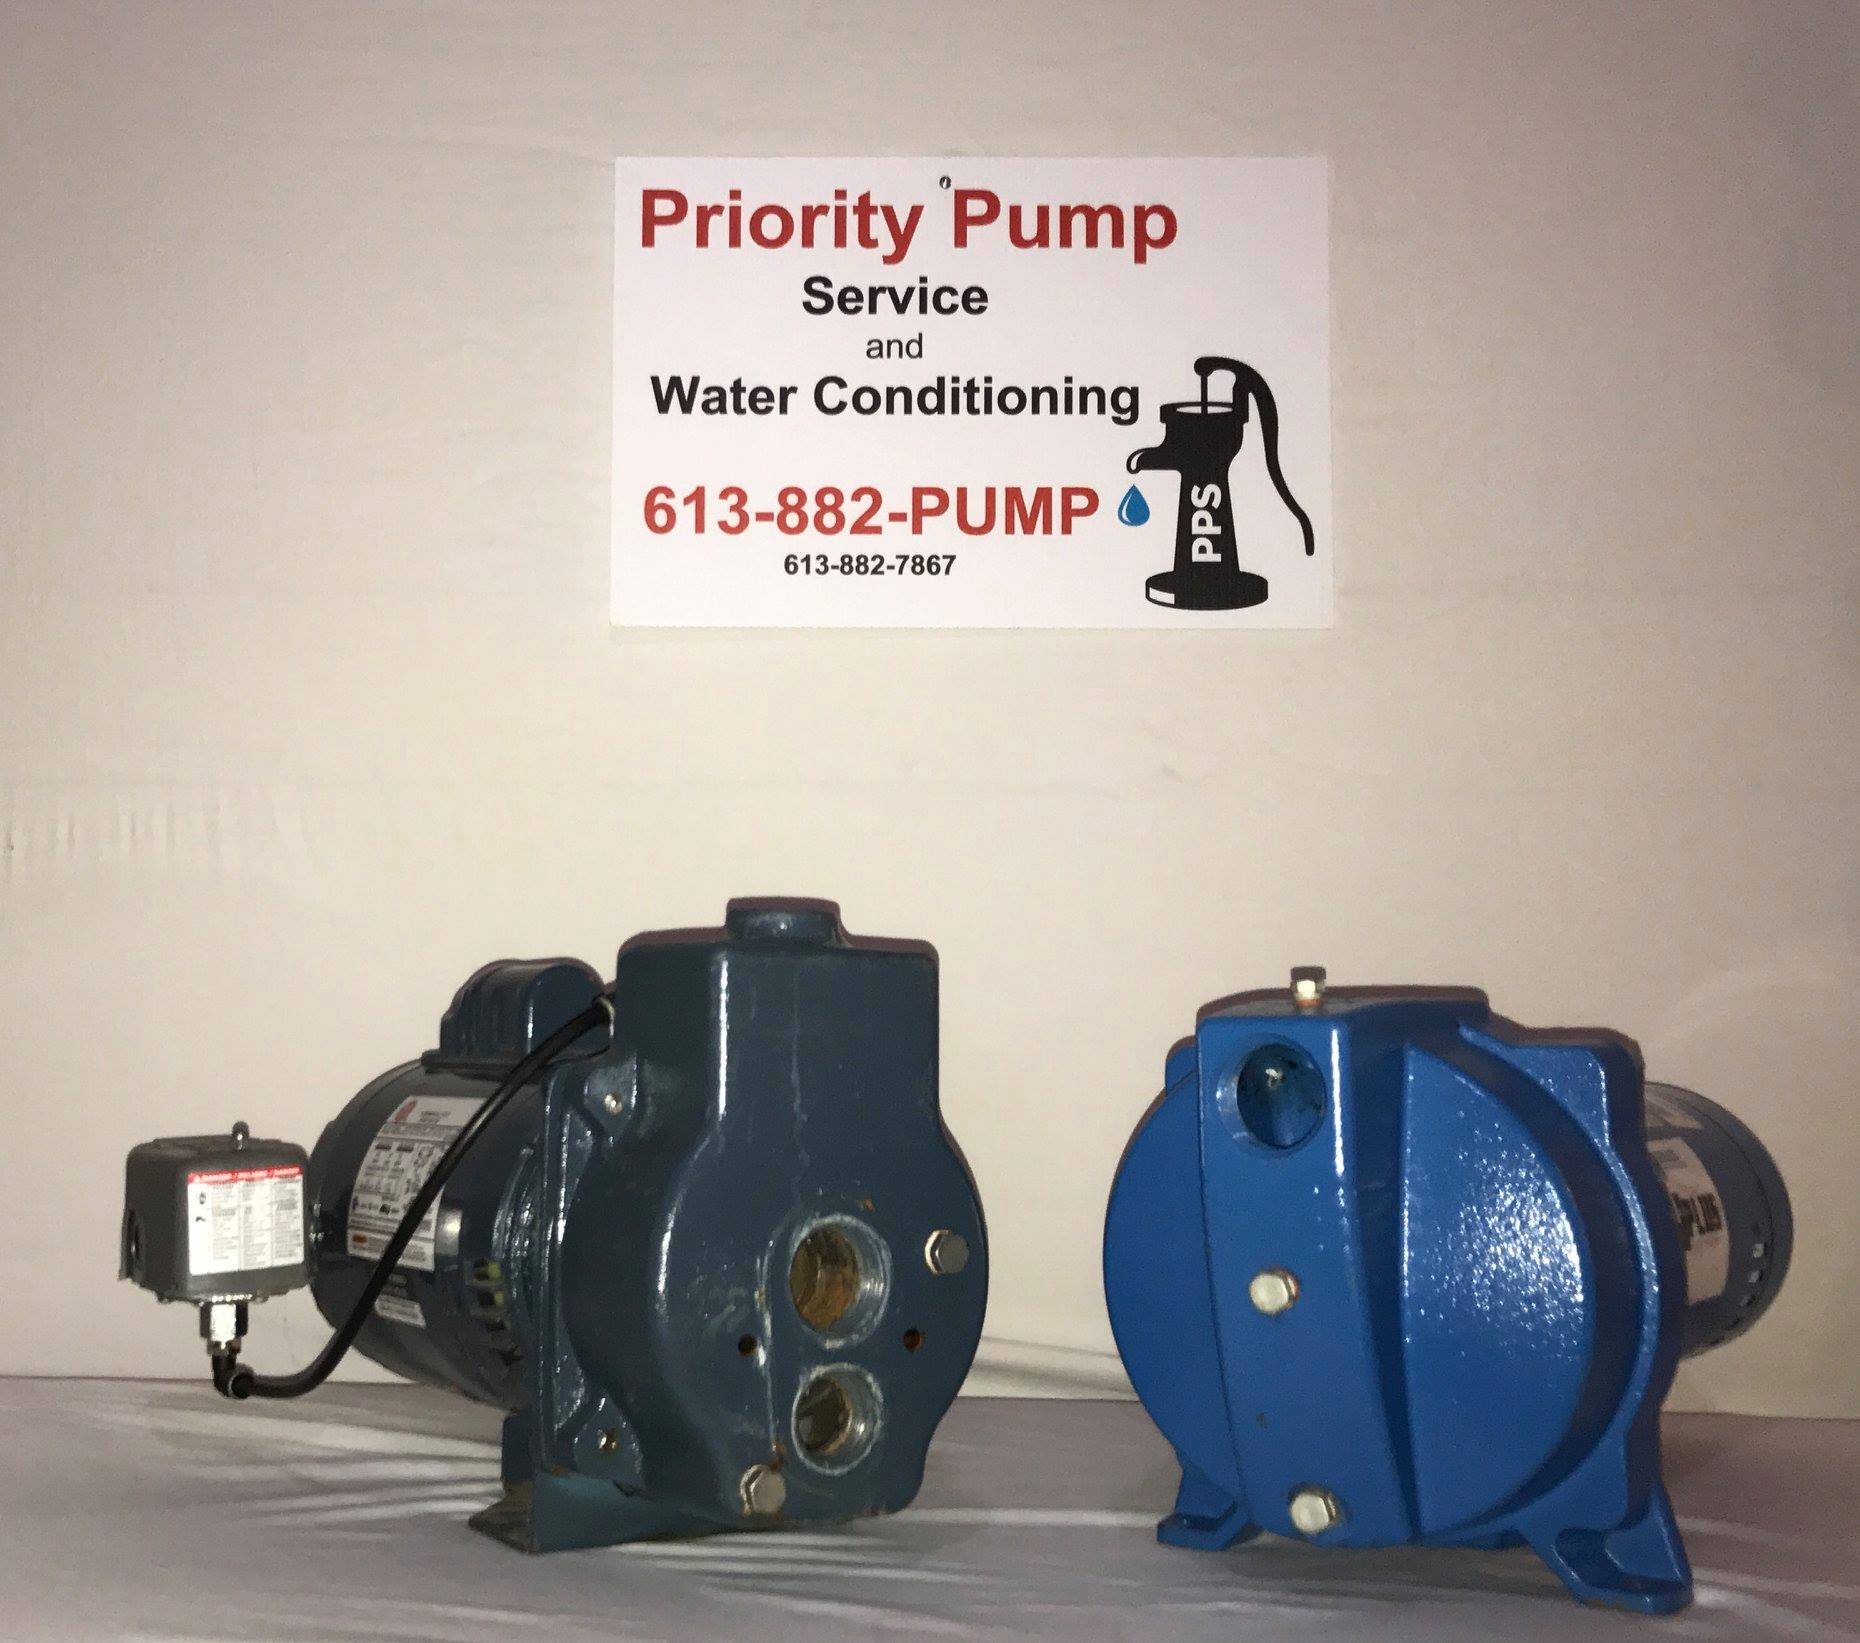 refurb pumps